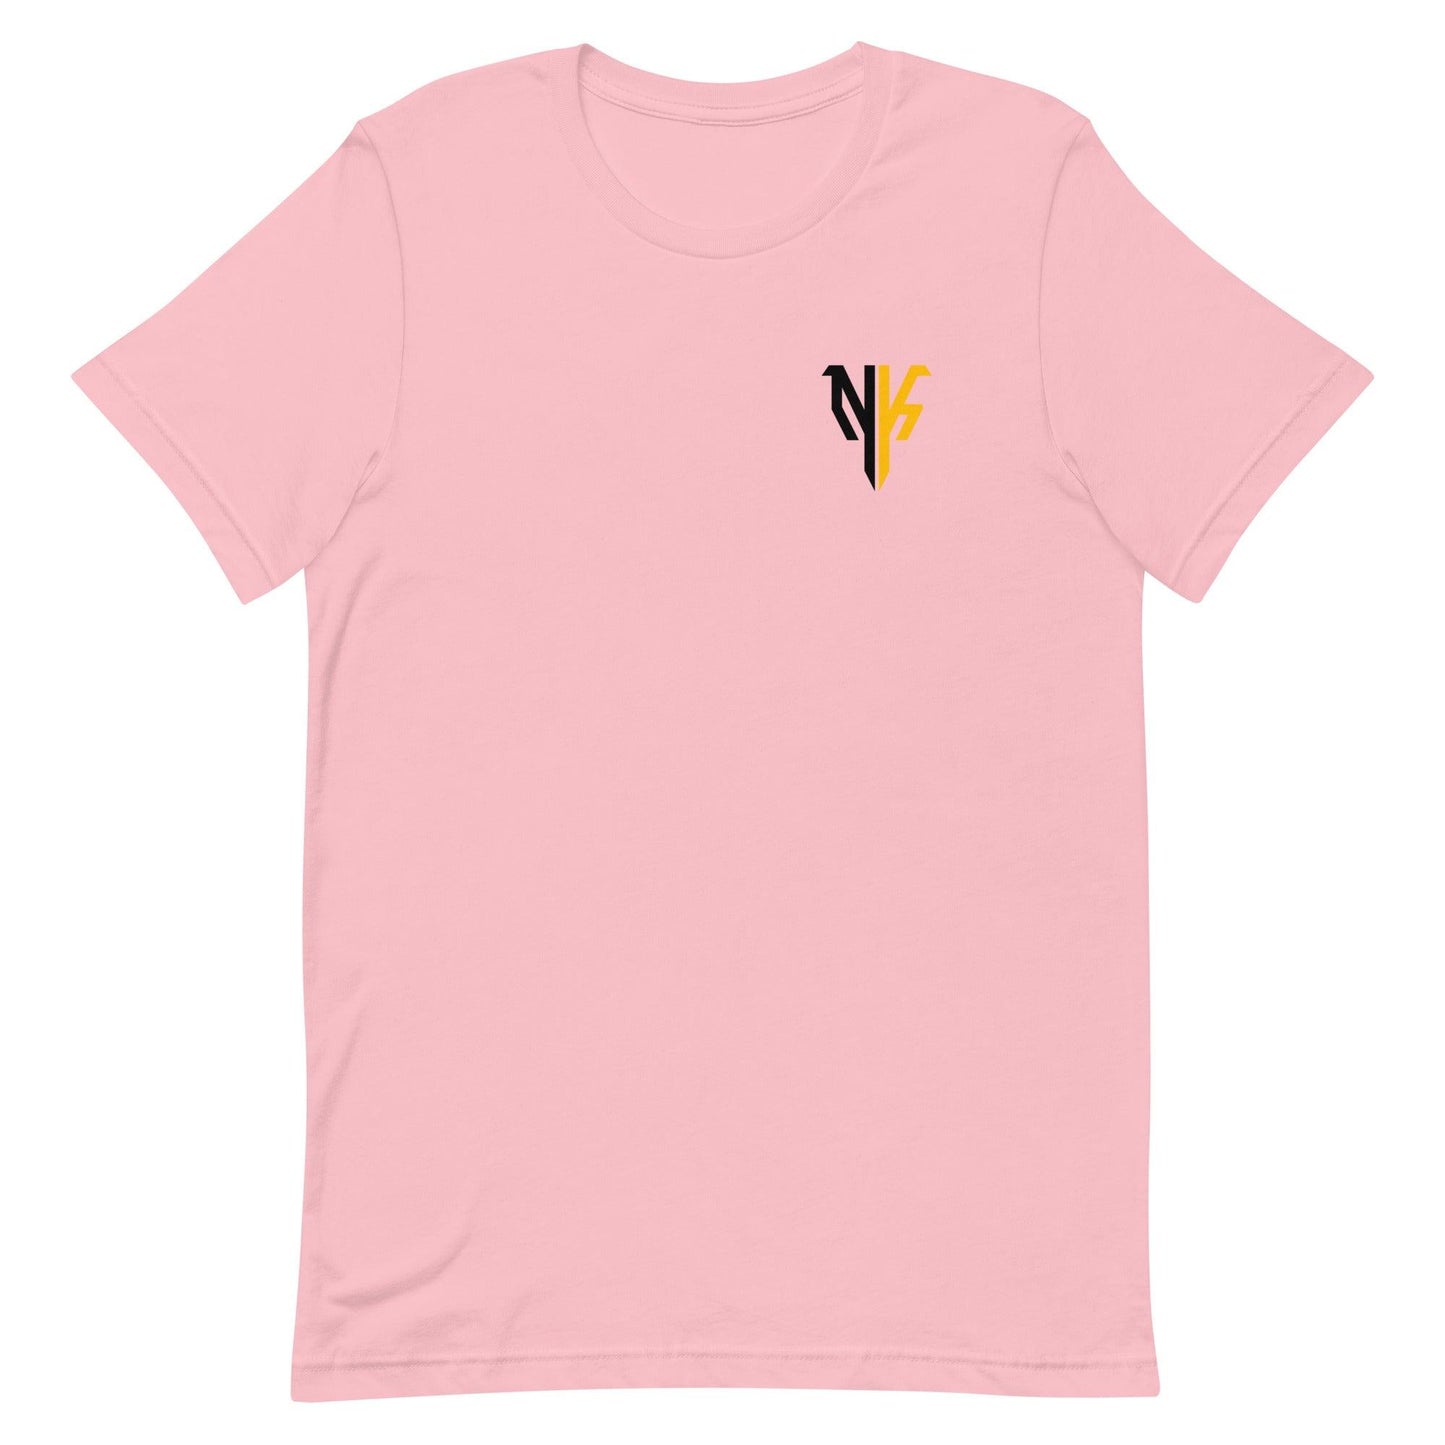 Nick Kern "Essential" t-shirt - Fan Arch